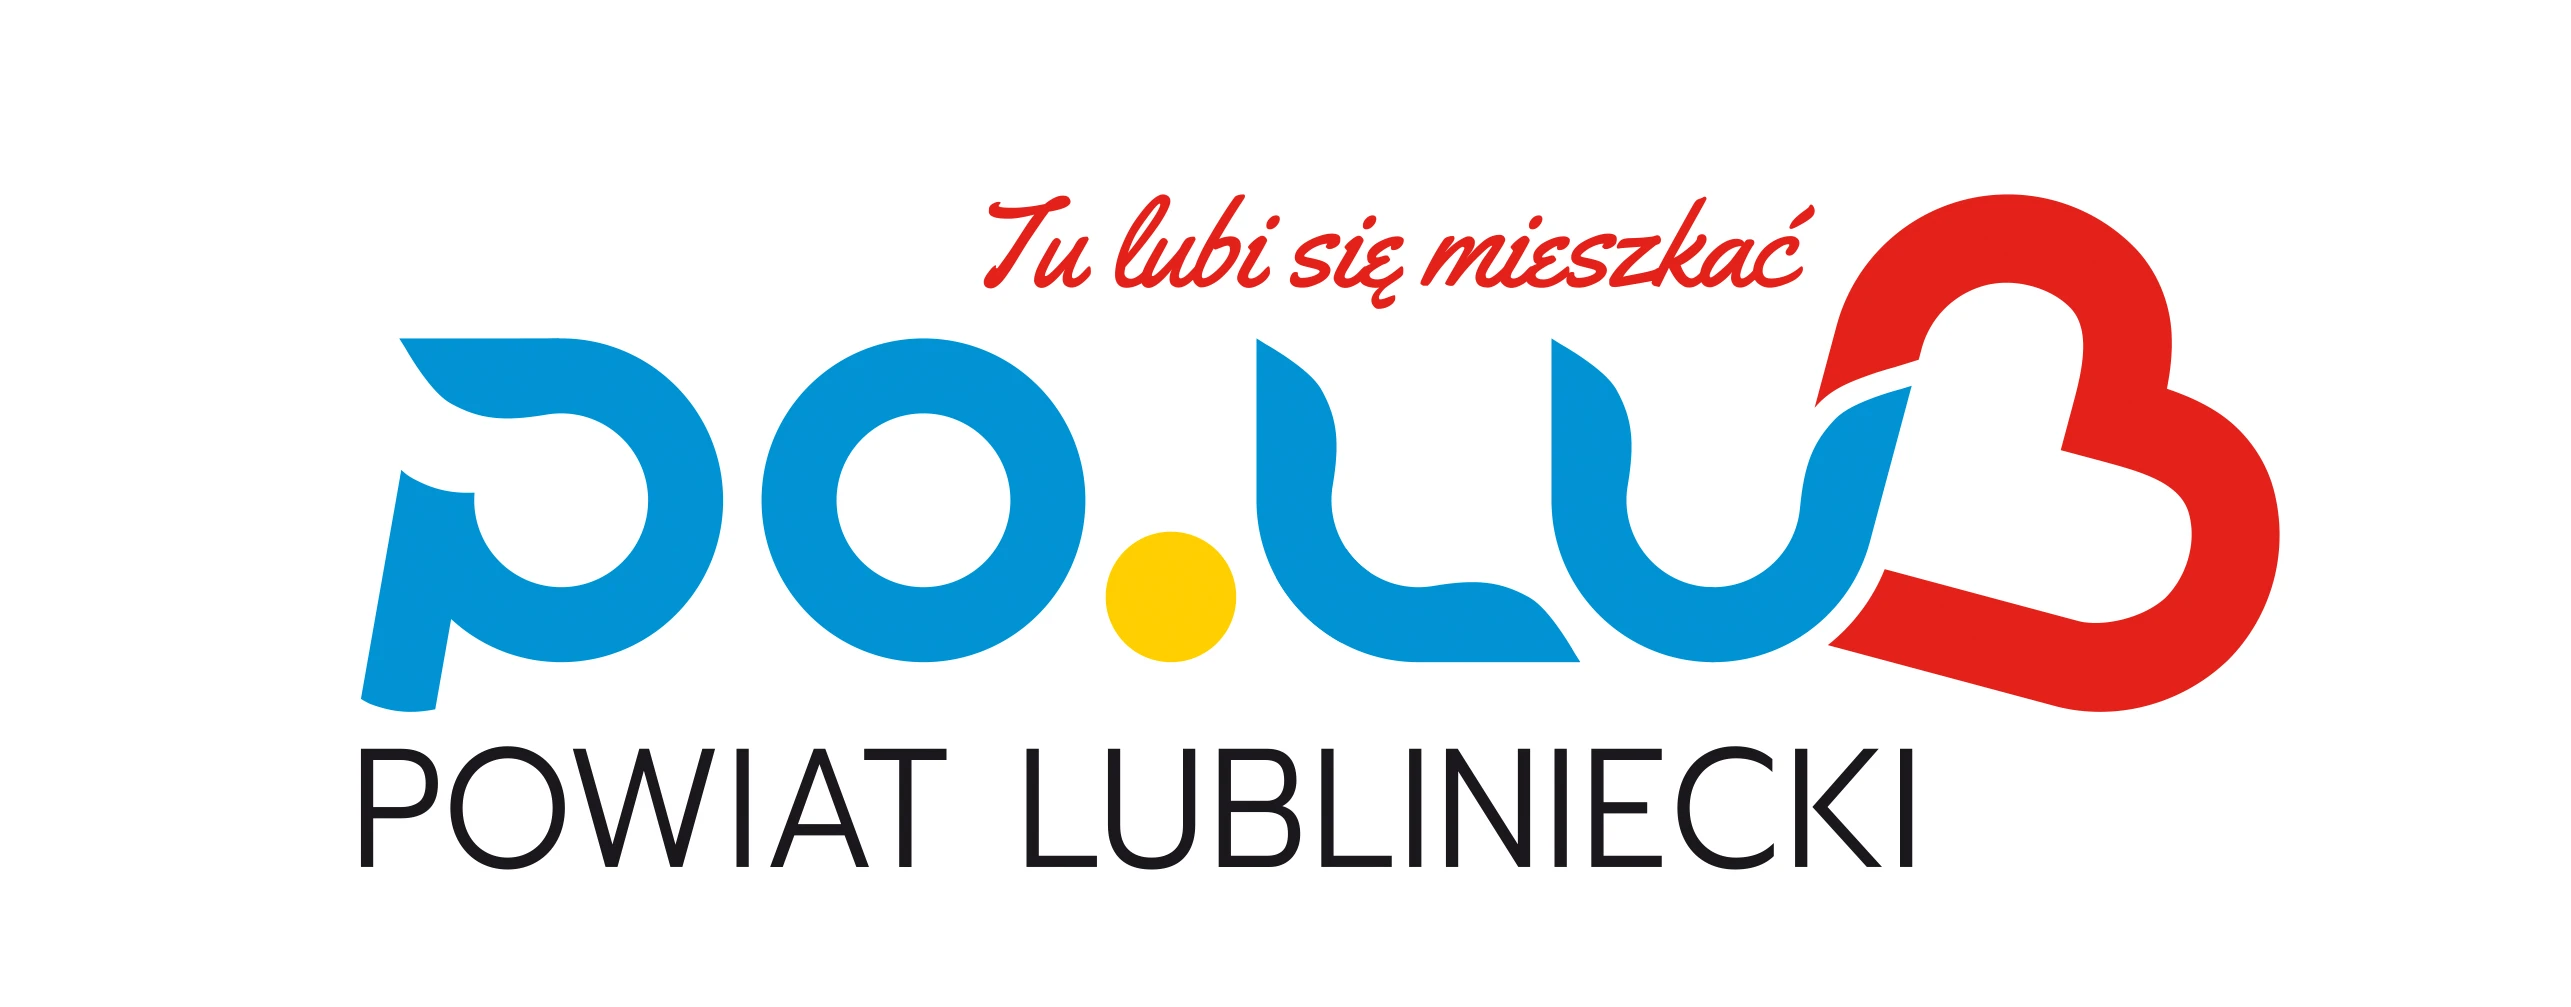 7d42a7-logo_powiat_lubliniecki.jpg